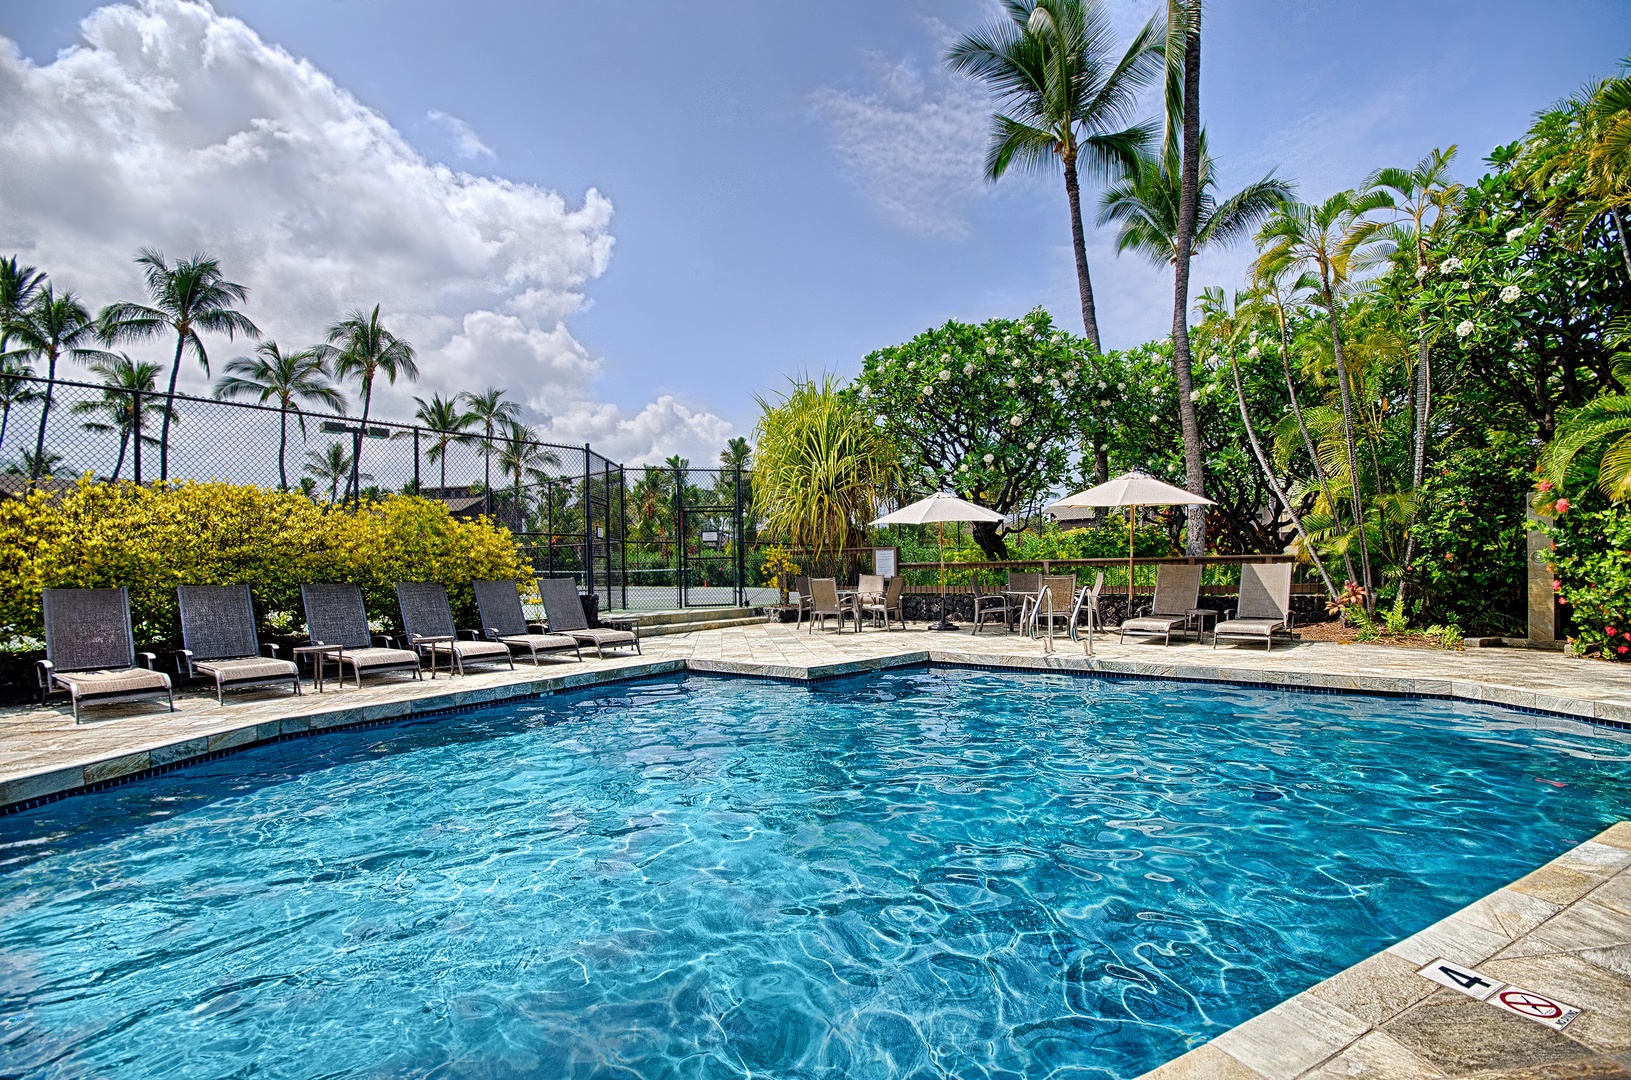 Kailua Kona Vacation Rentals, Kanaloa 701 - Complex pool, one of 3!